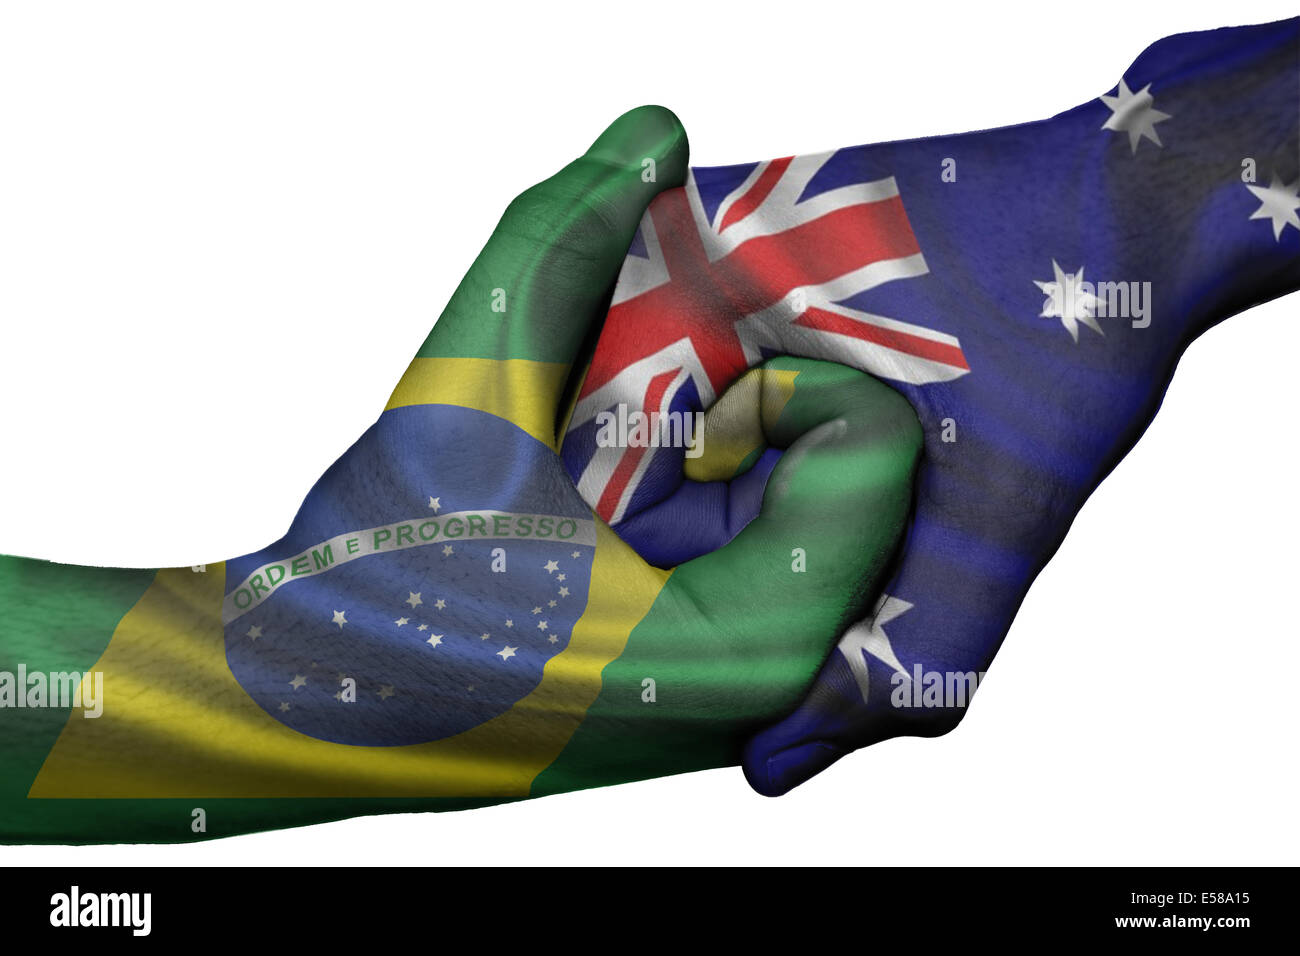 Handshake diplomatiche tra paesi: bandiere del Brasile e Australia sovradipinta le due mani Foto Stock